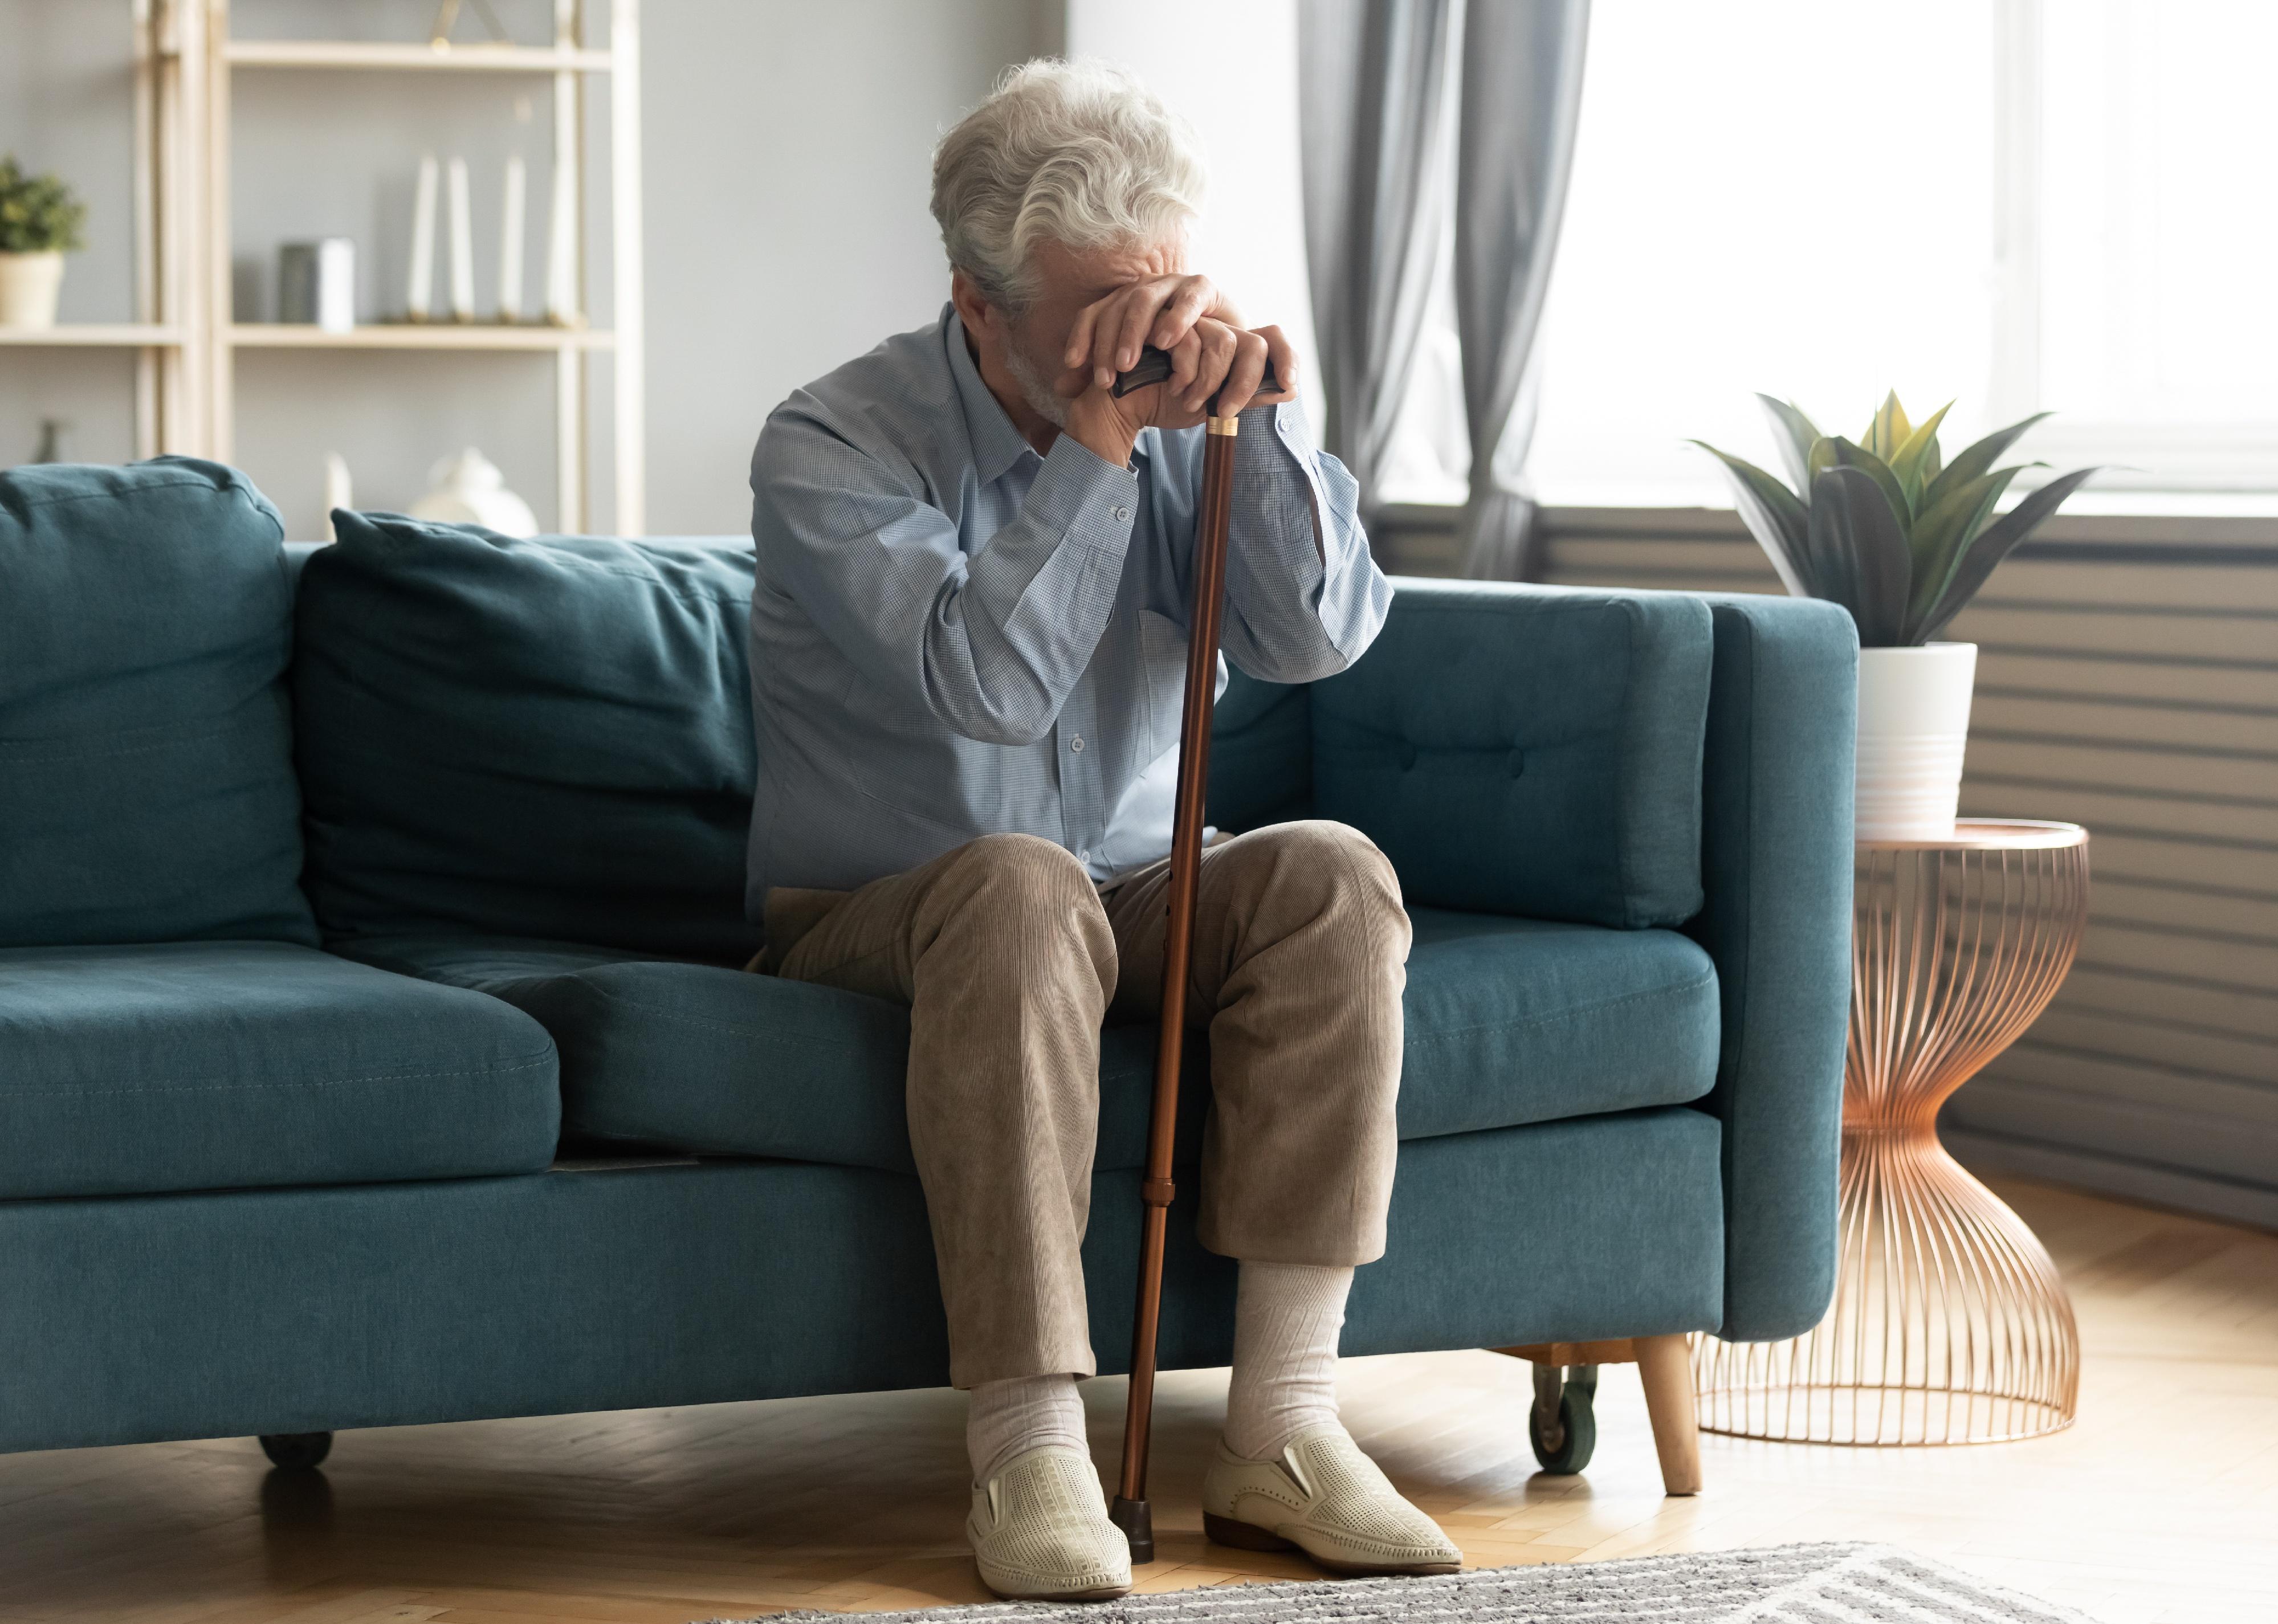 Older man resting on sofa, leaning on walking cane.